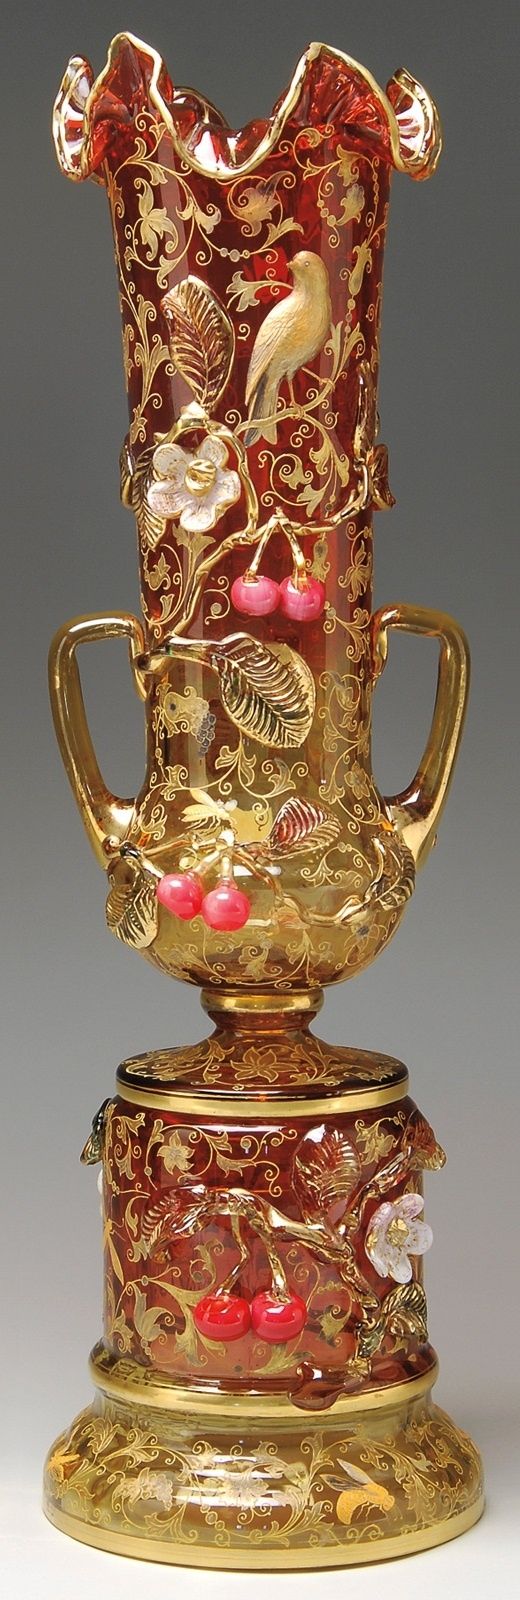 Ornate Moser bohemian glass vase, late 19th century